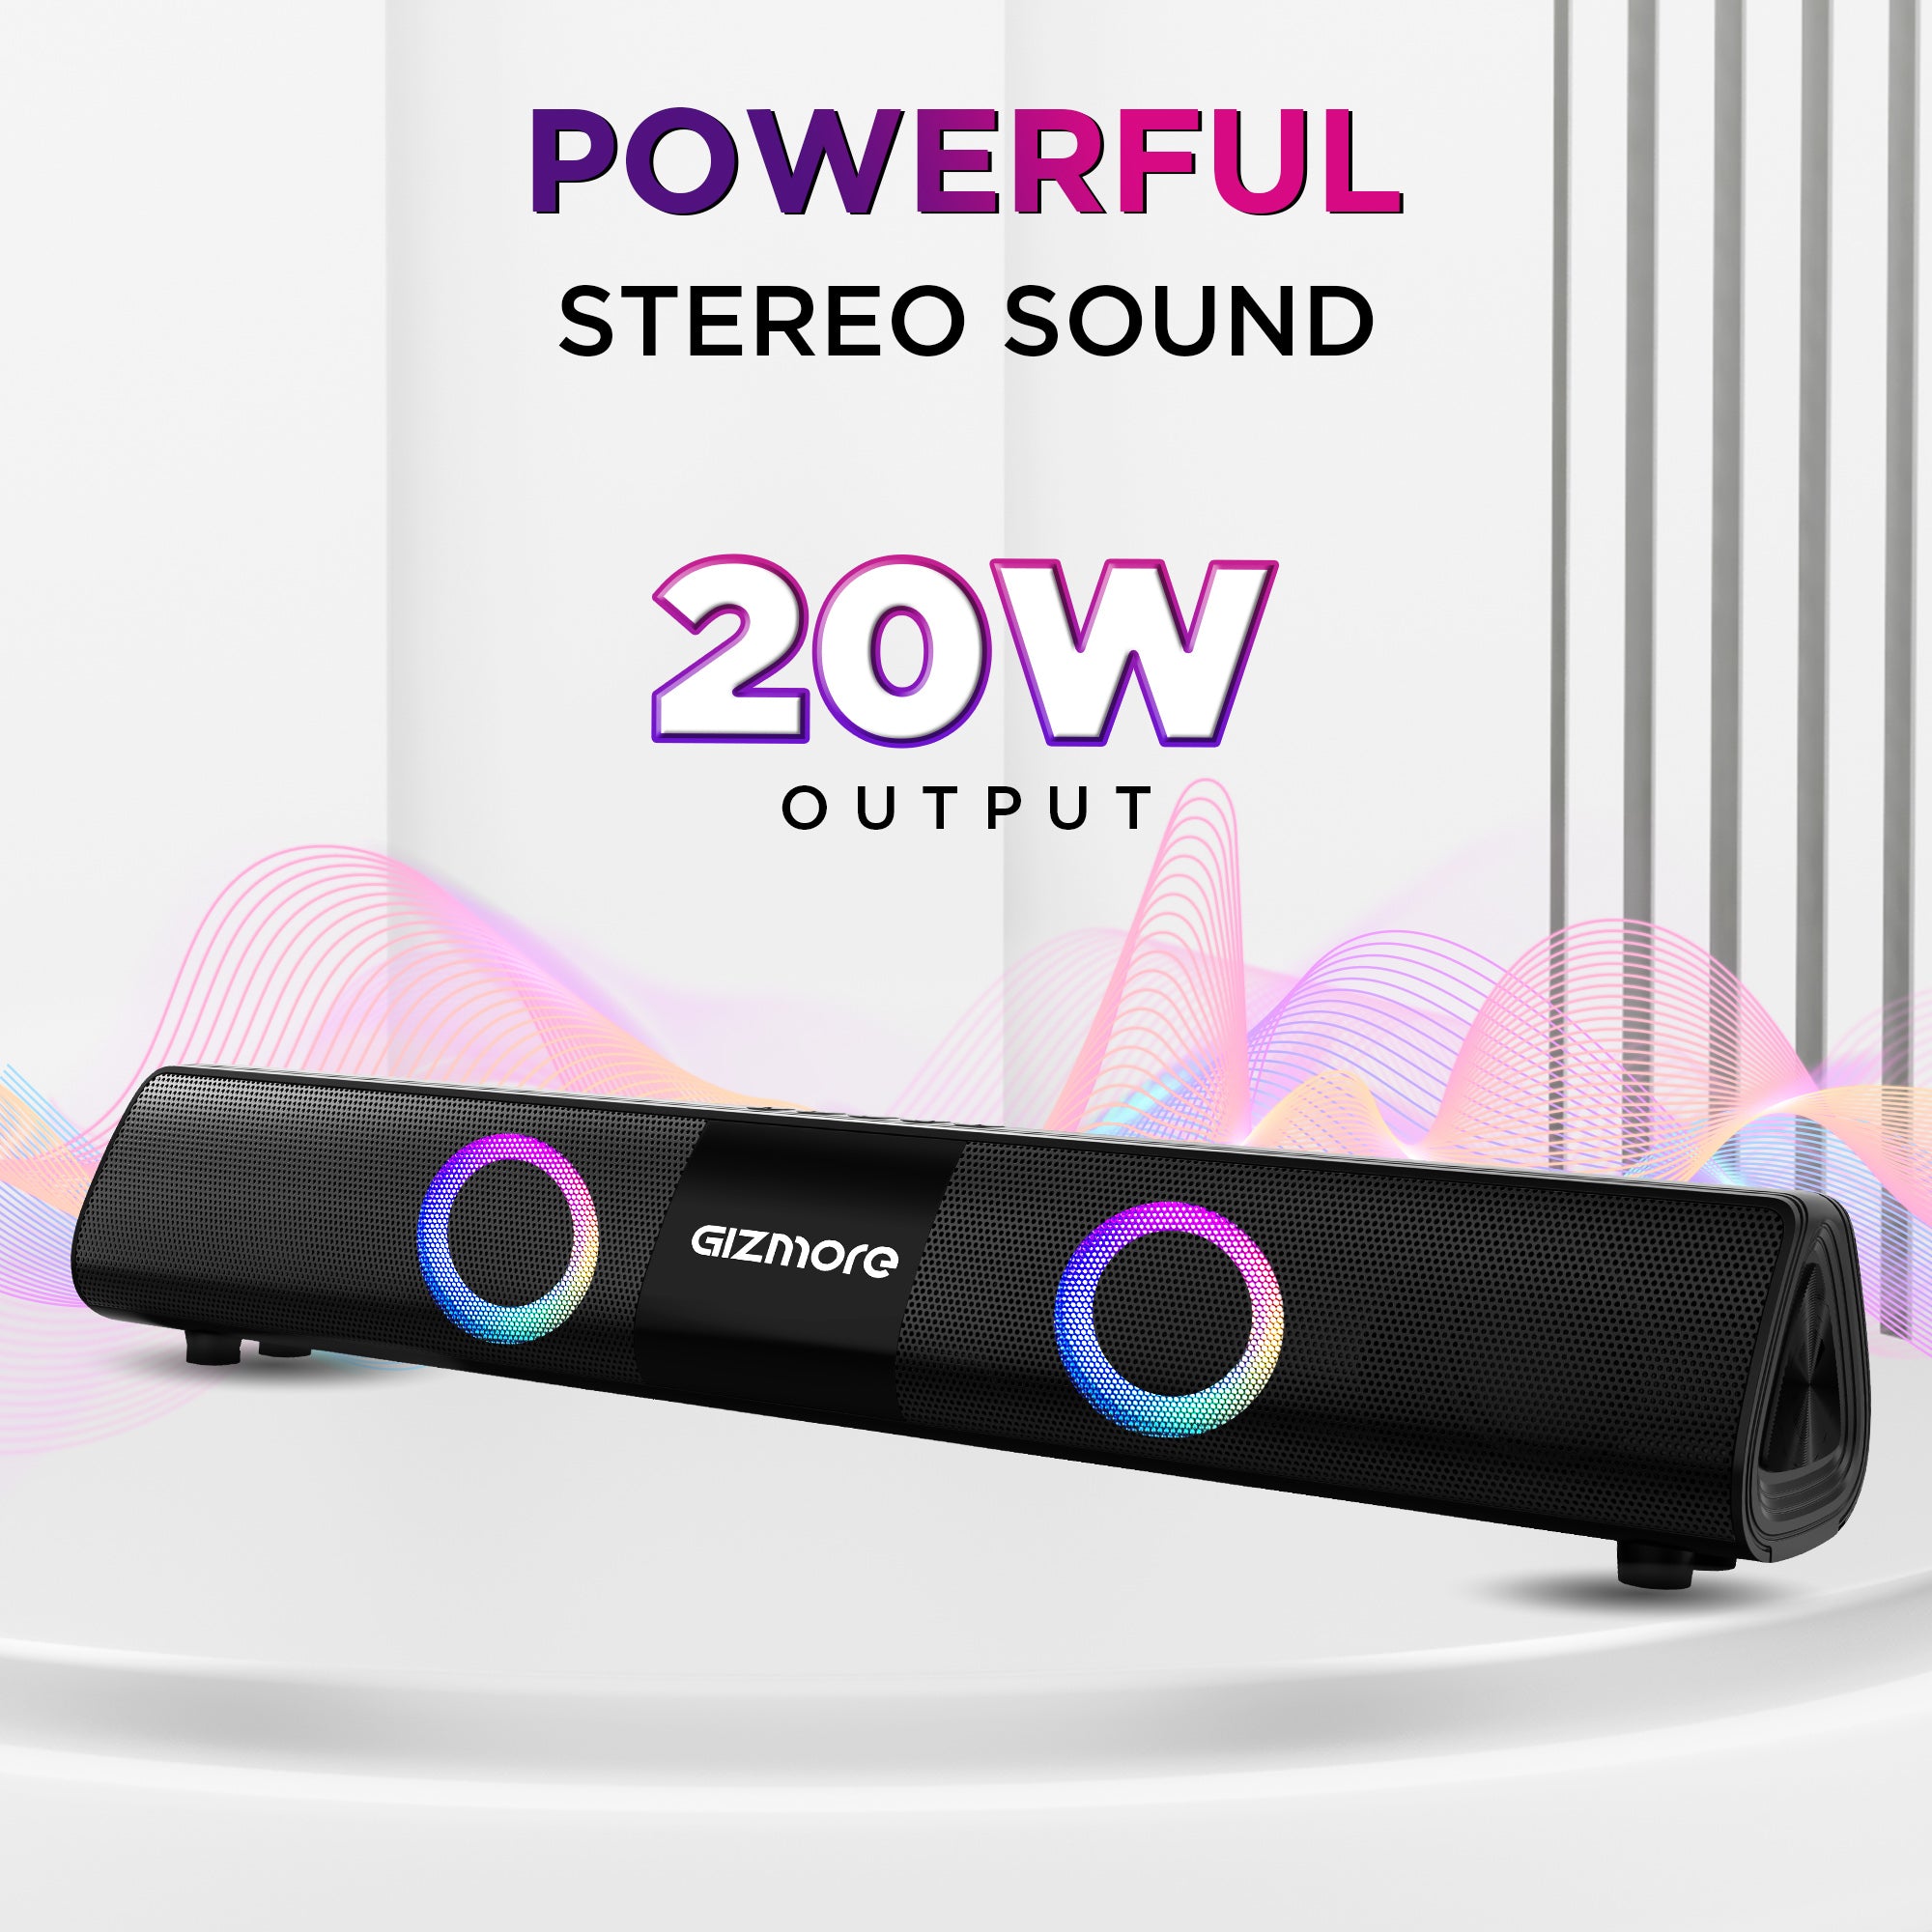 GIZMORE 2000 Soundbar Speaker 20W RMS Powerful Bass Soundbar with Quad & Equalizer Mode, in-Built RGB Light, Immersive Surround Sound, Upto 6 Hrs Playtime , Multi Connectivity AUX/USB/BT/FM/SD Card